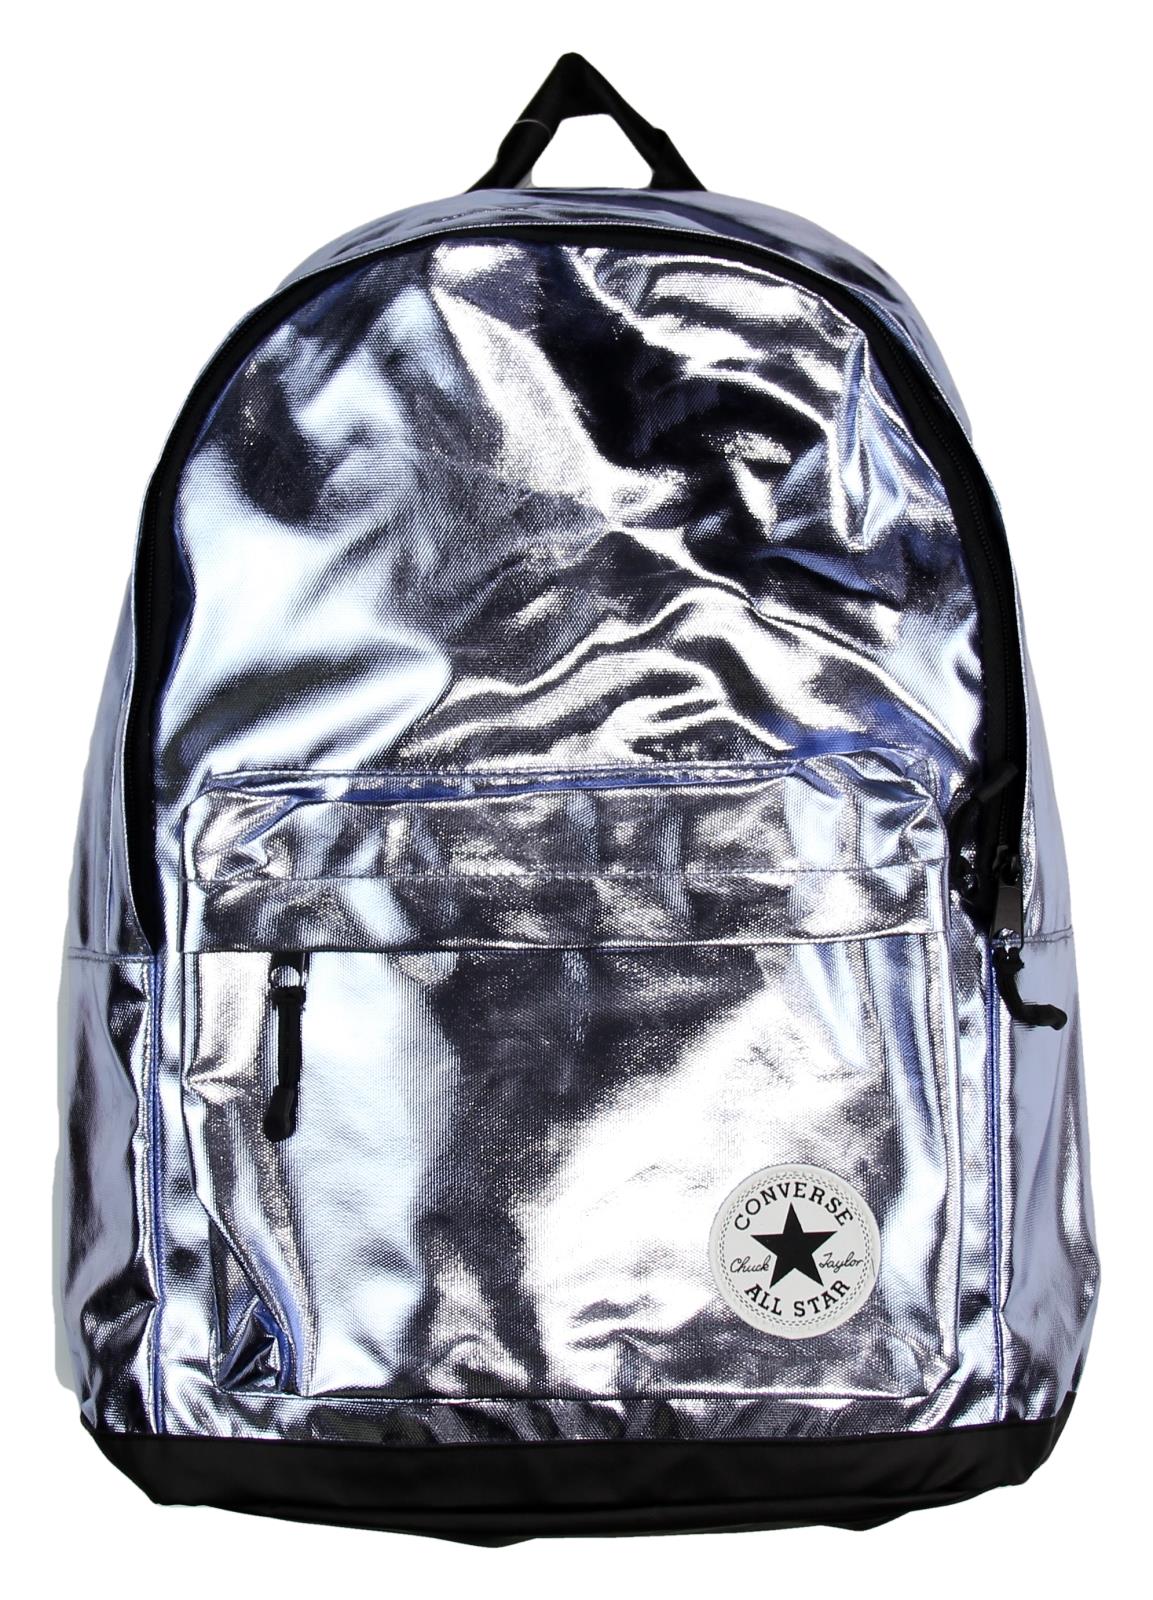 converse kids backpack